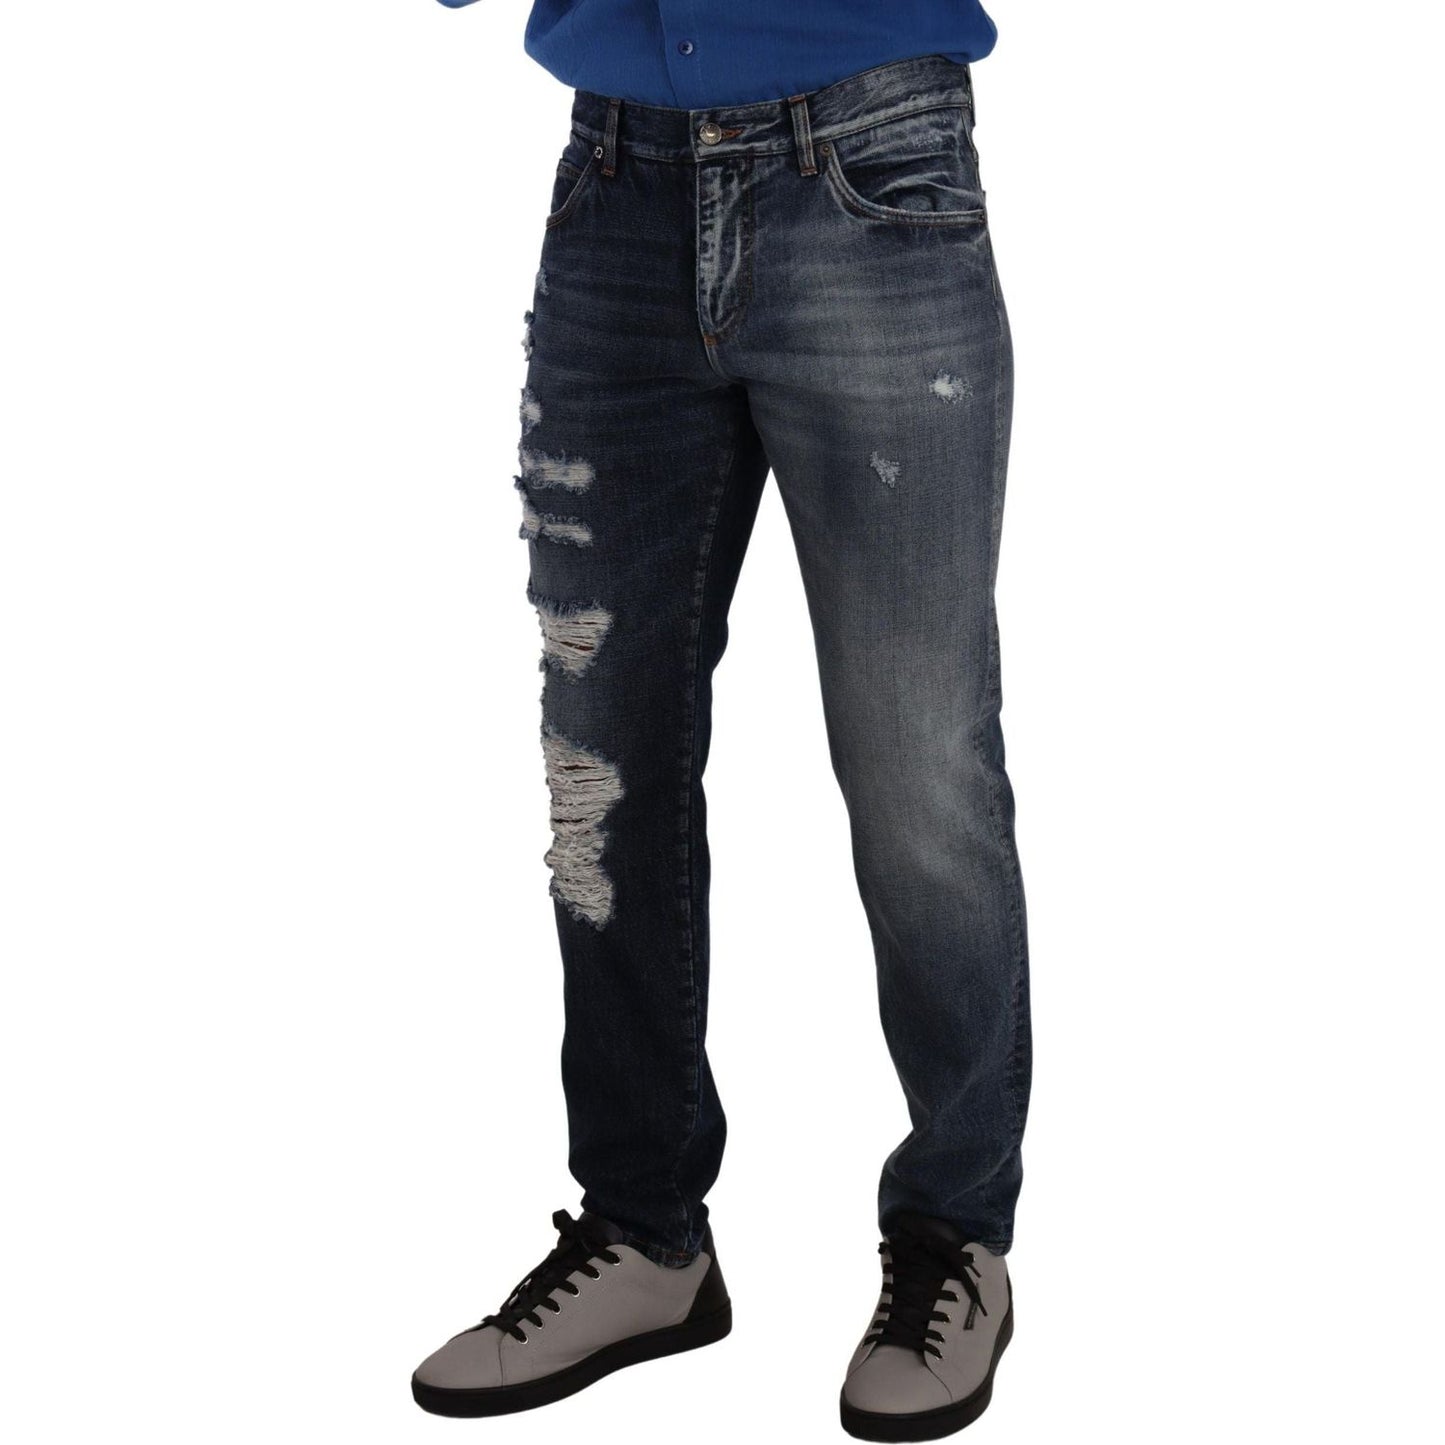 Dolce & Gabbana Chic Tattered Denim Jeans blue-cotton-regular-denim-trousers-jeans IMG_7046-scaled-a0685dea-5f9.jpg